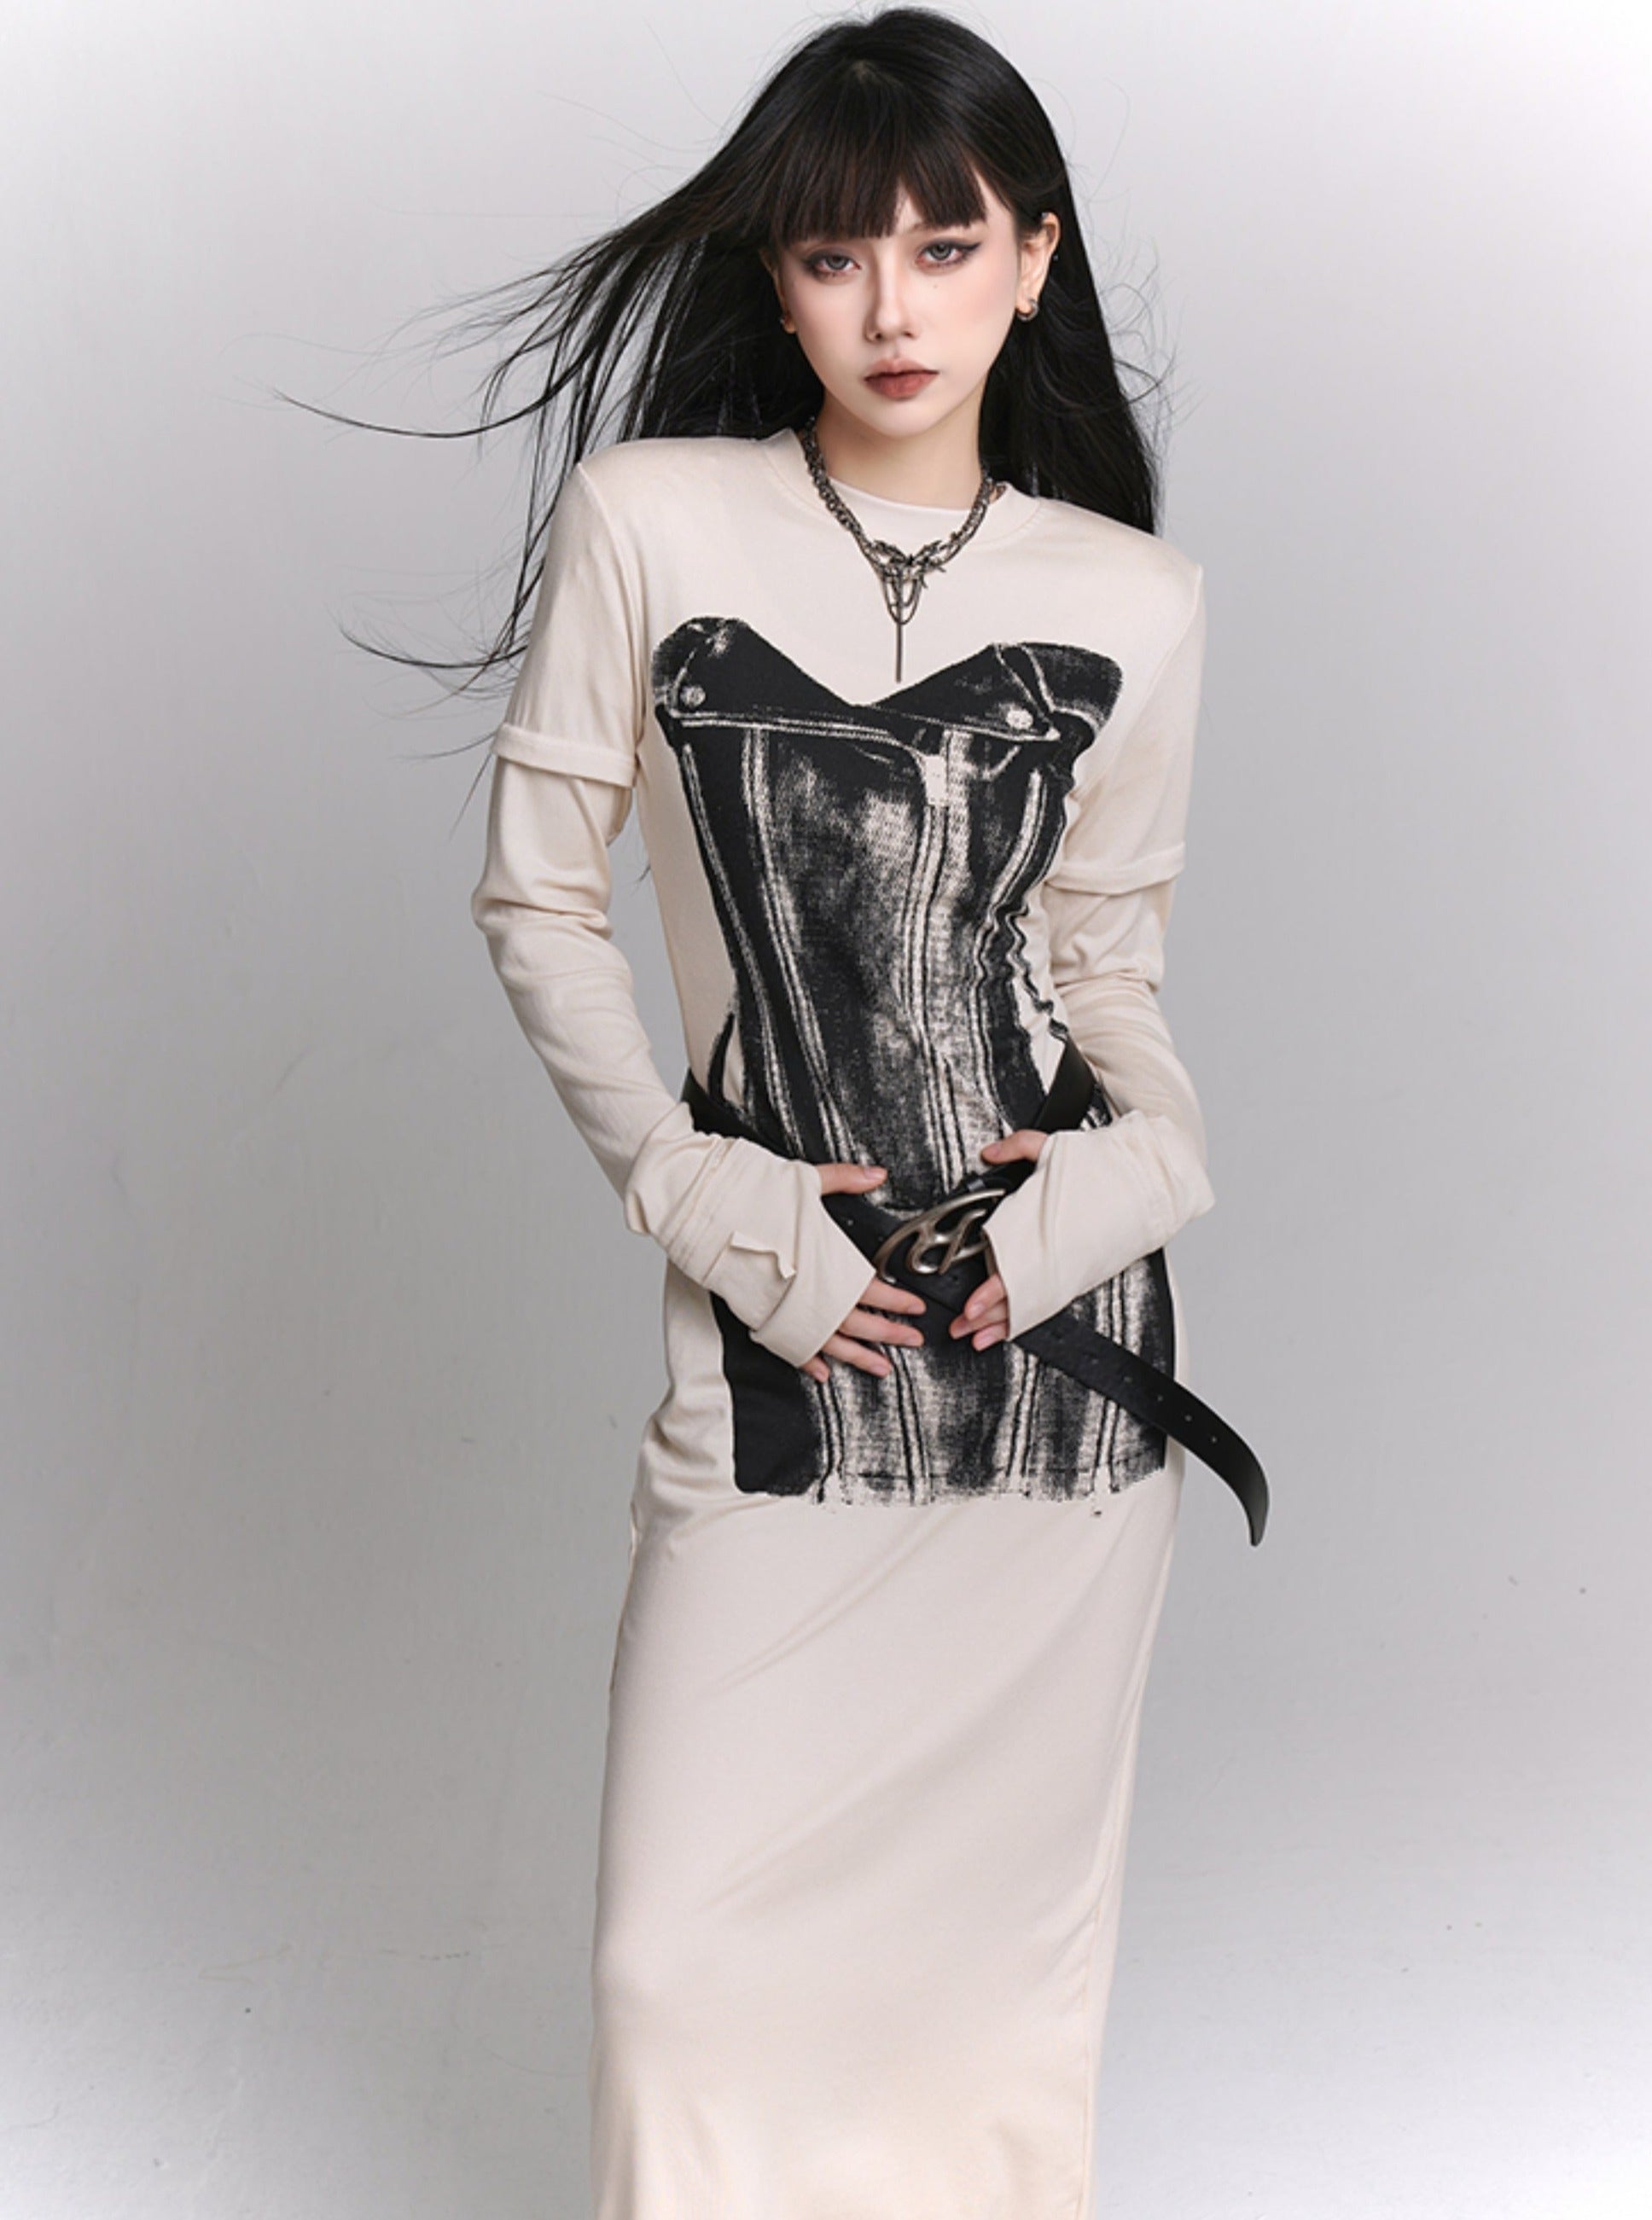 Off-White Knitted Coat Dress - chiclara